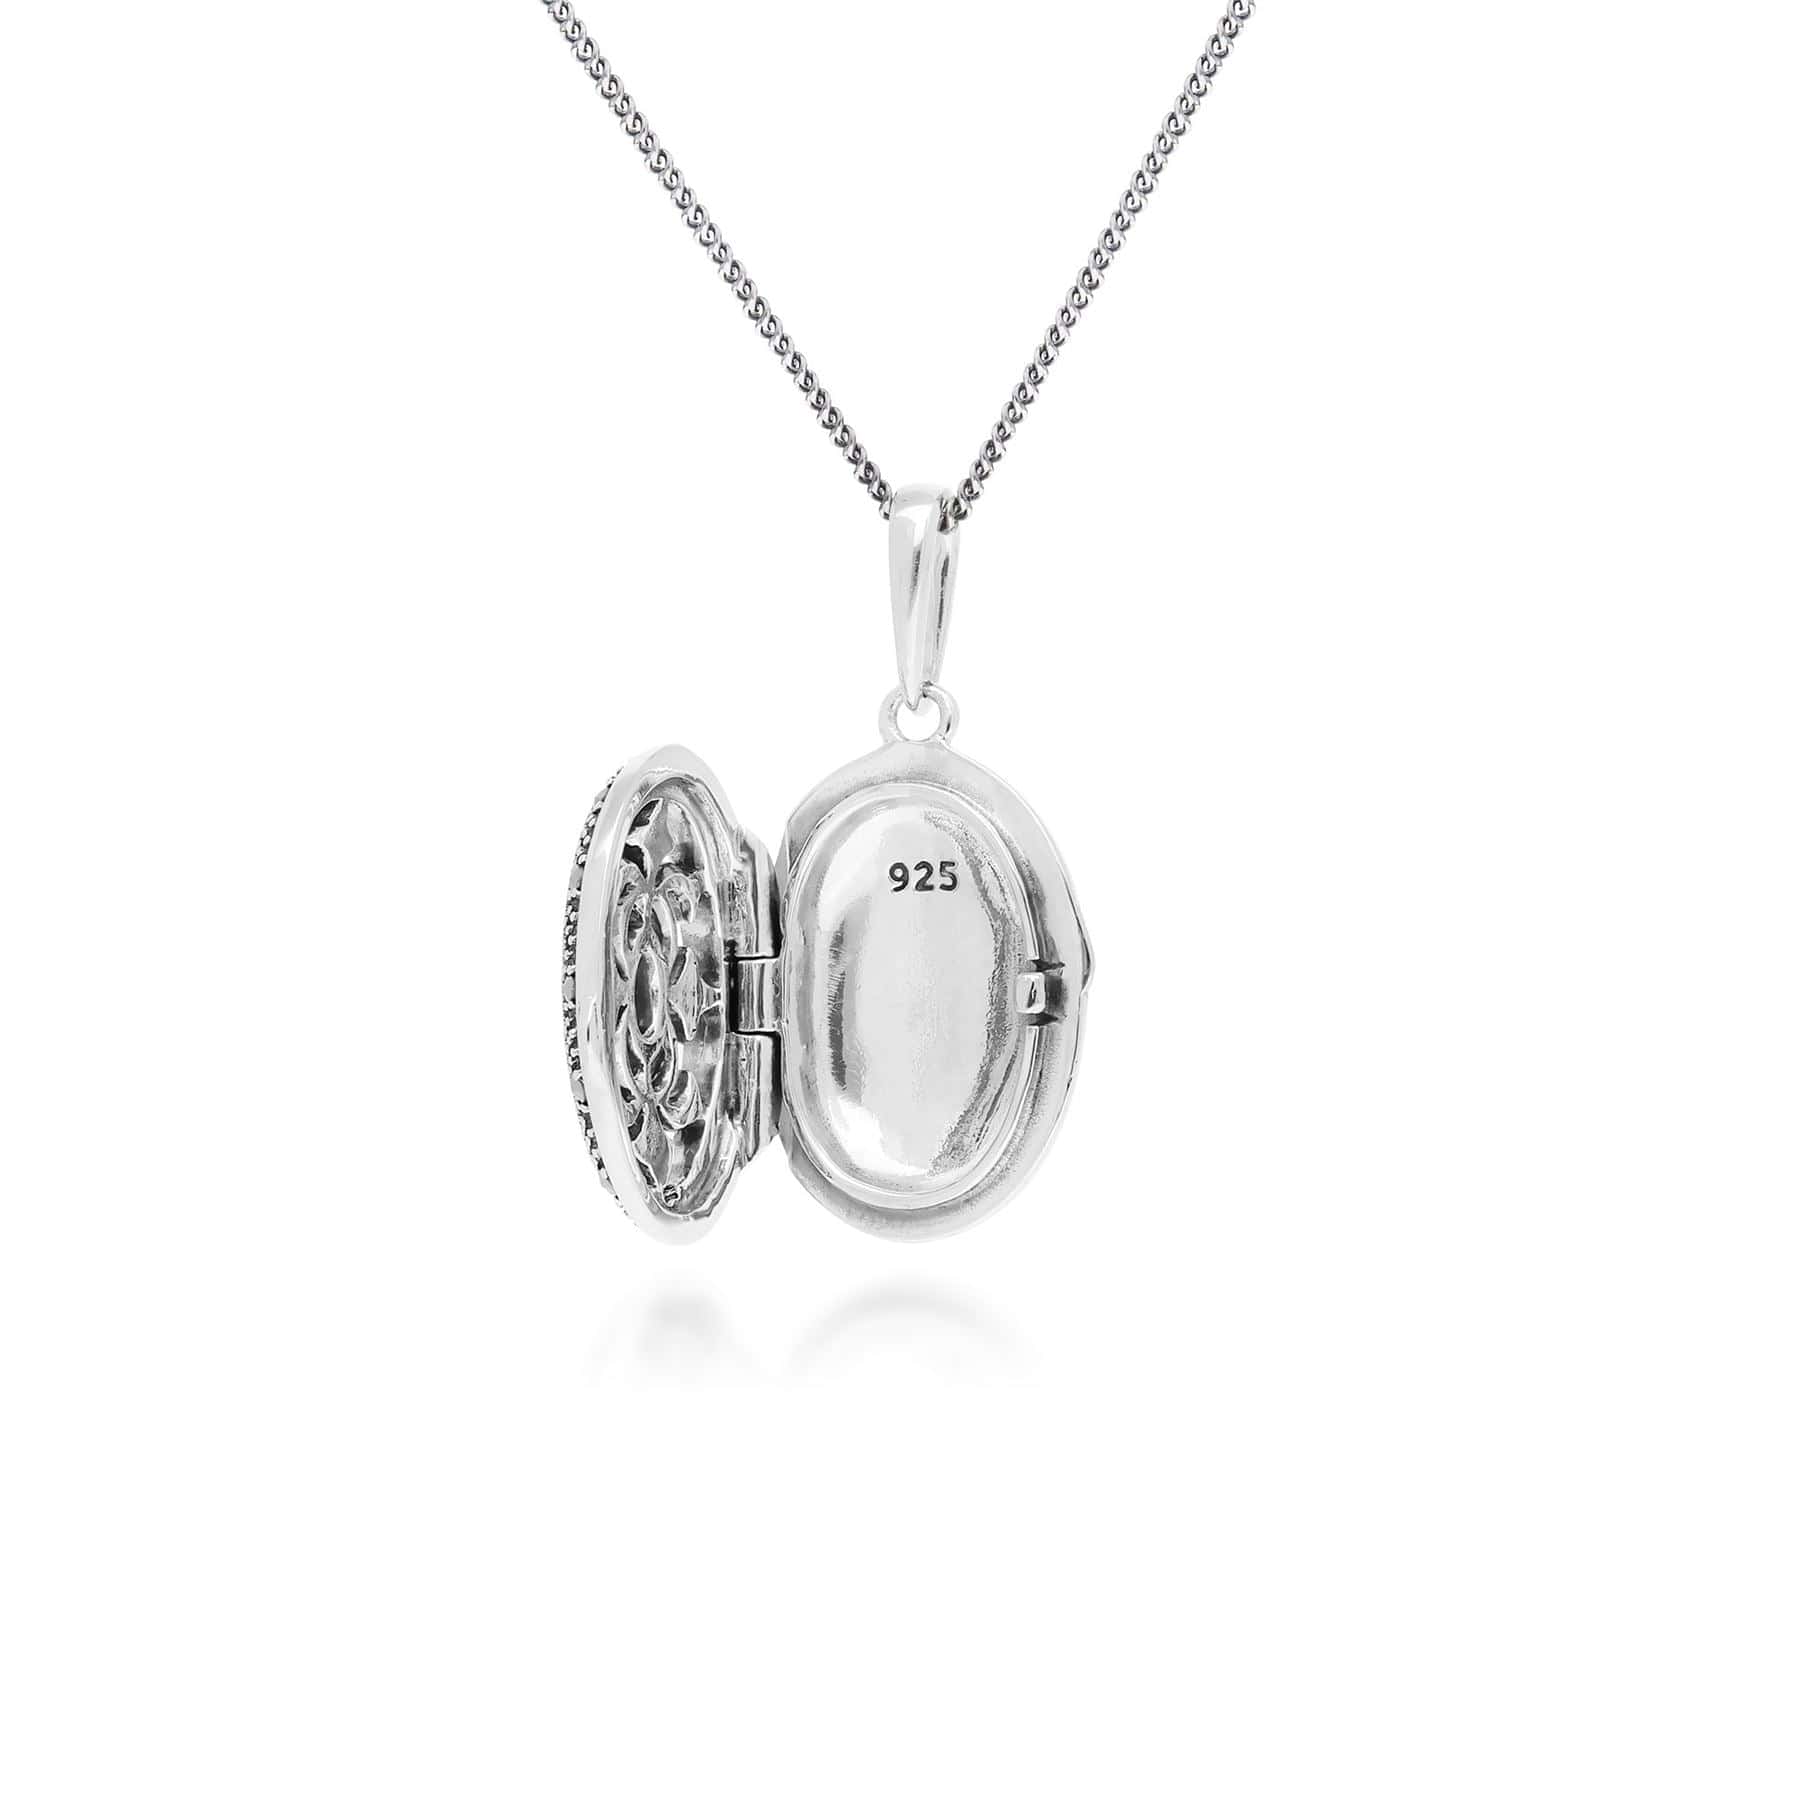 214N716212925 Art Nouveau Style Oval Opal & Marcasite Locket Necklace in 925 Sterling Silver 3